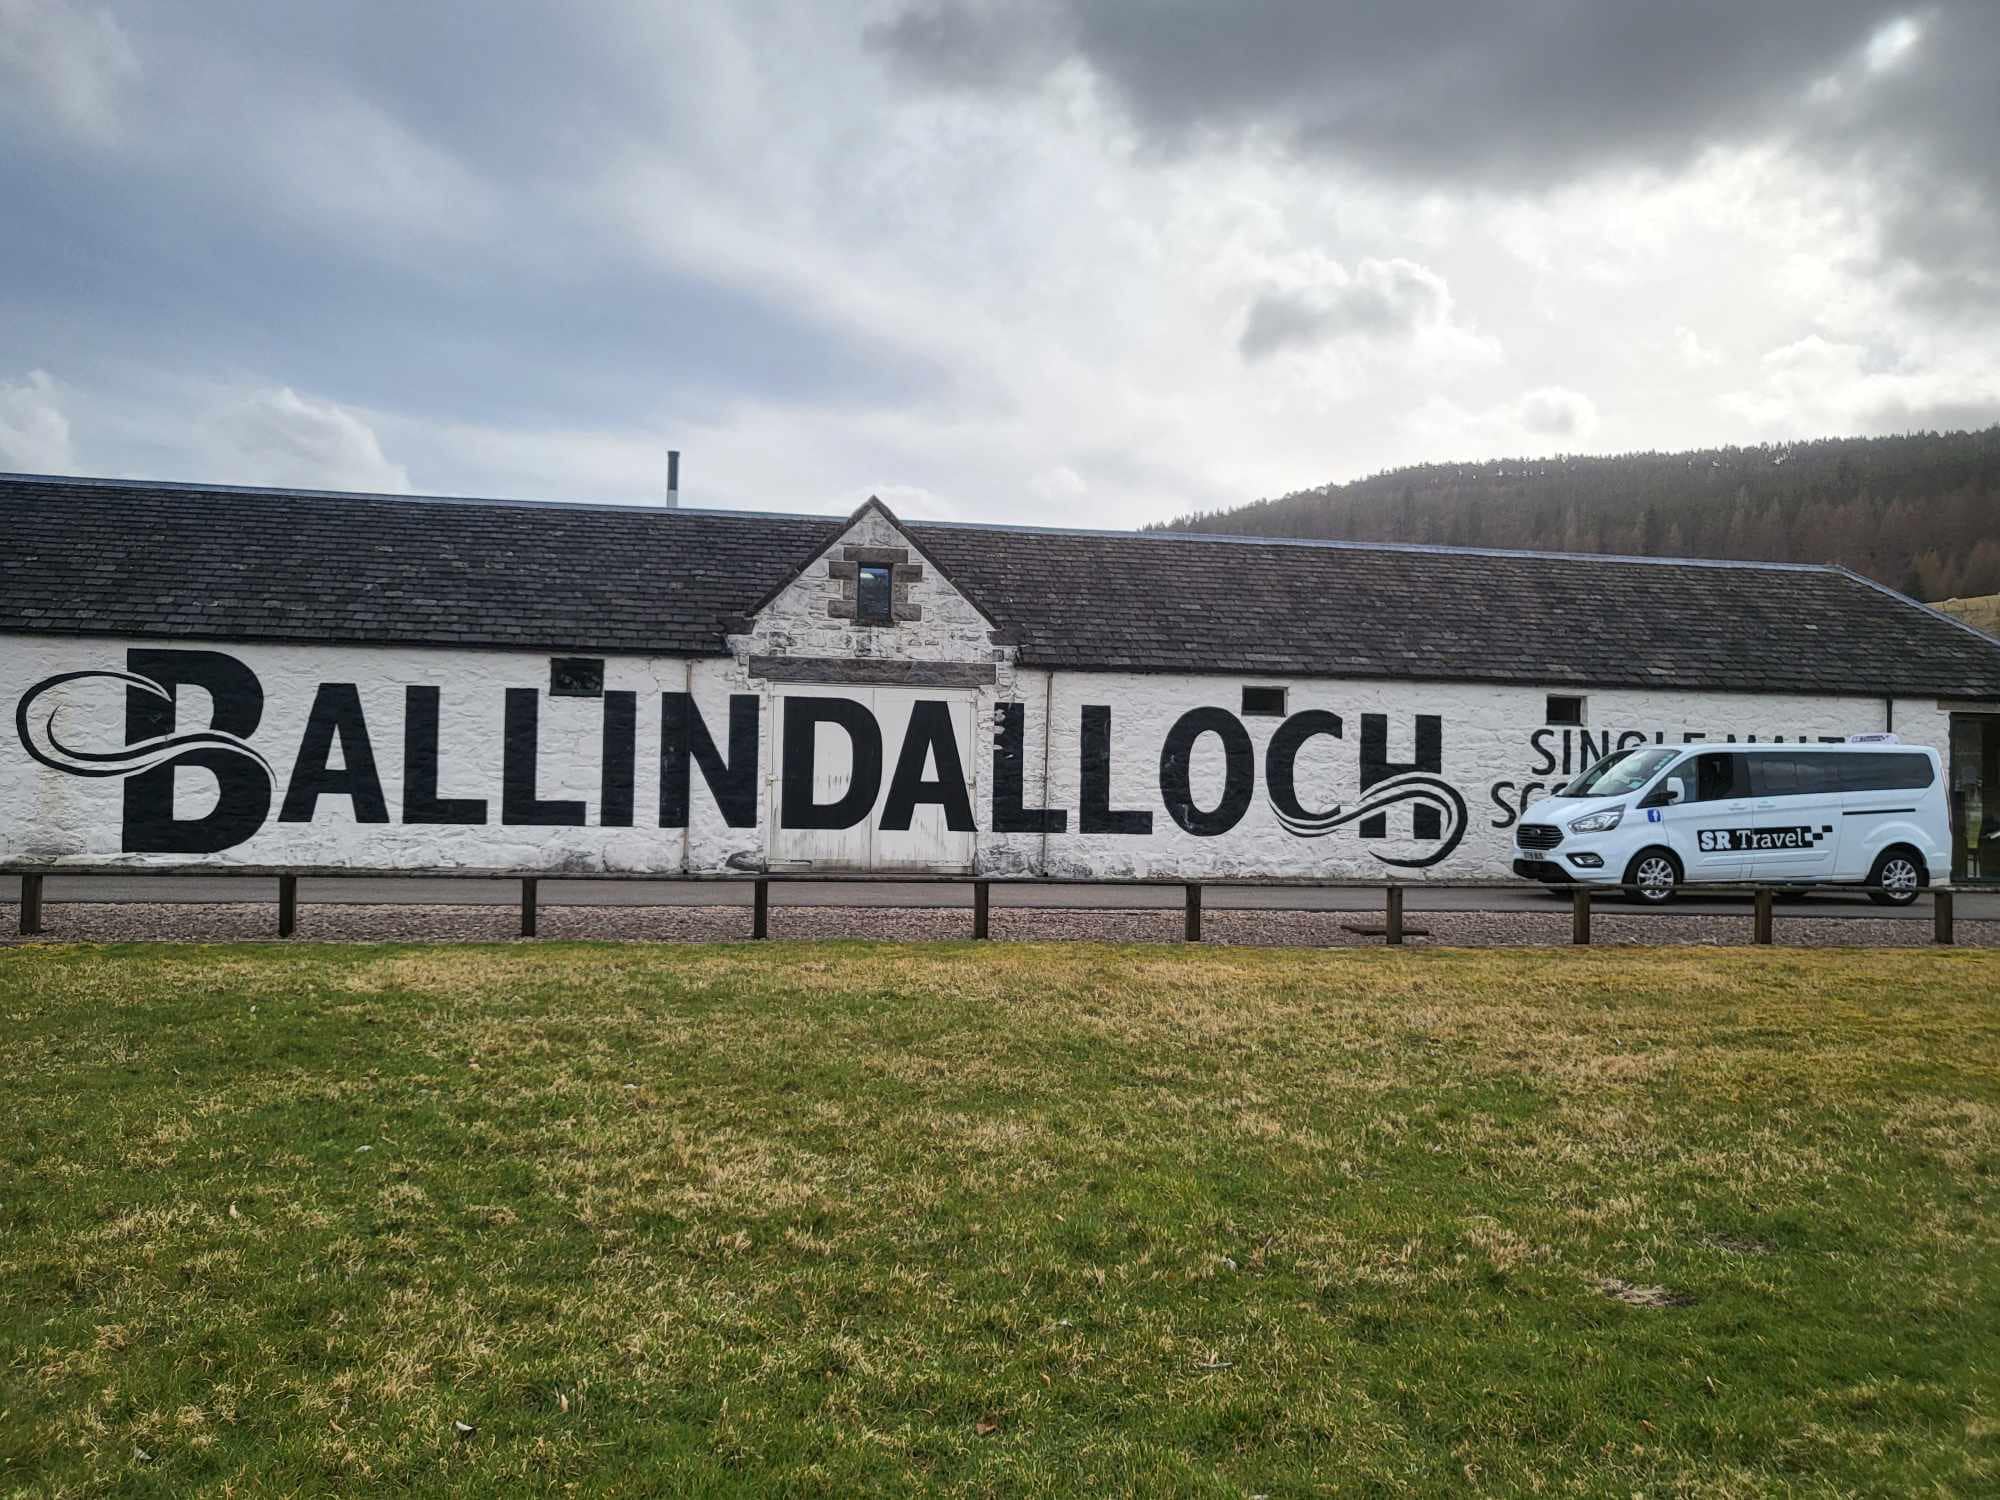 Ballindalloch distillery